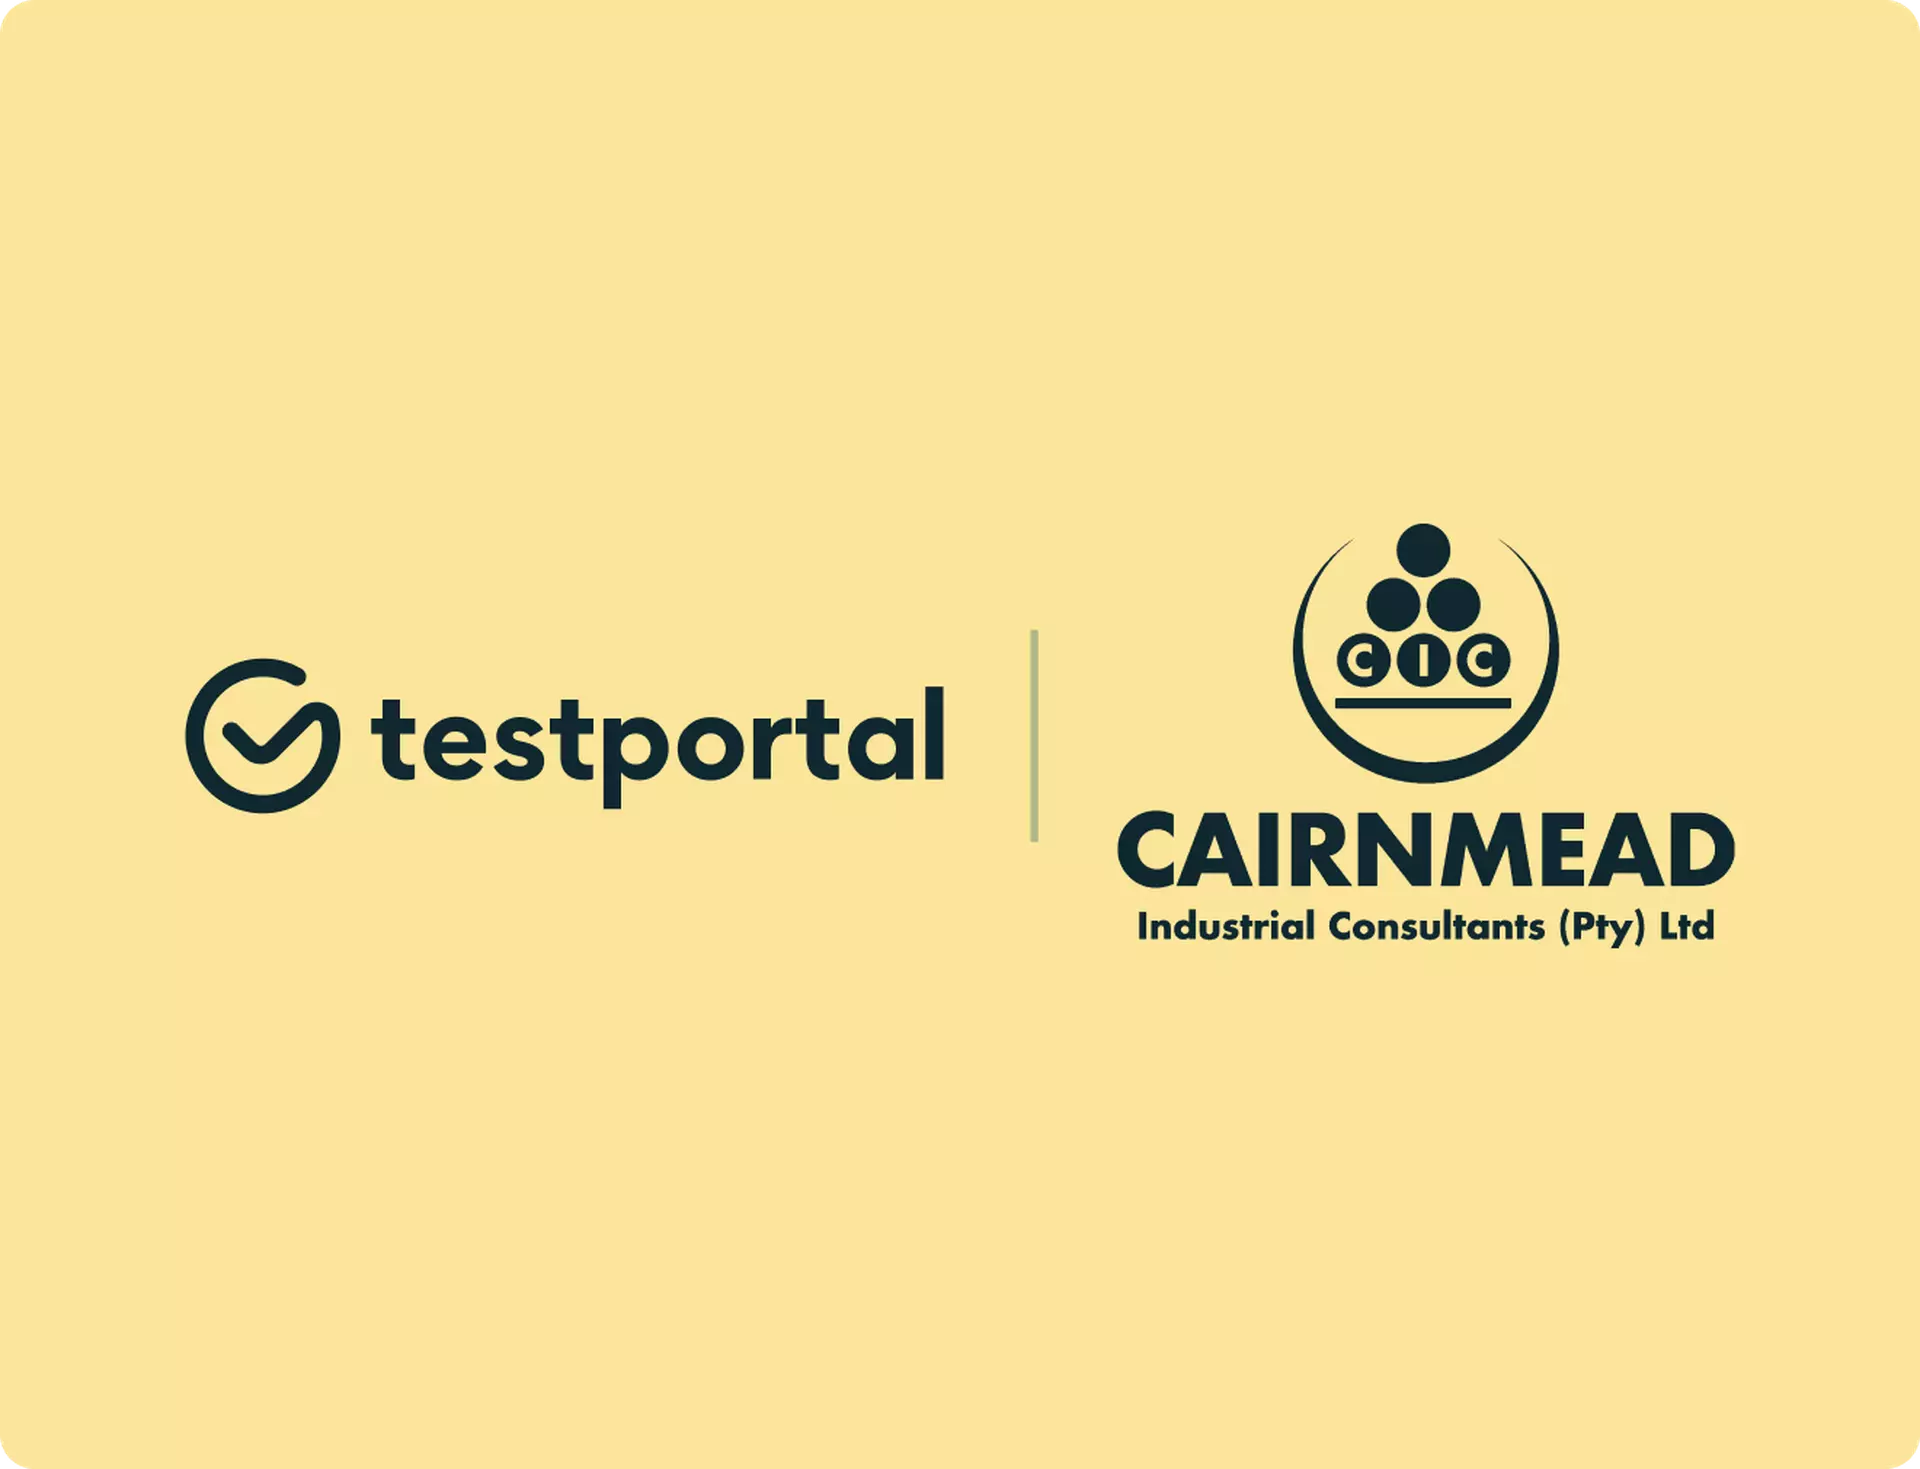 Testportal and Cairnmead logos